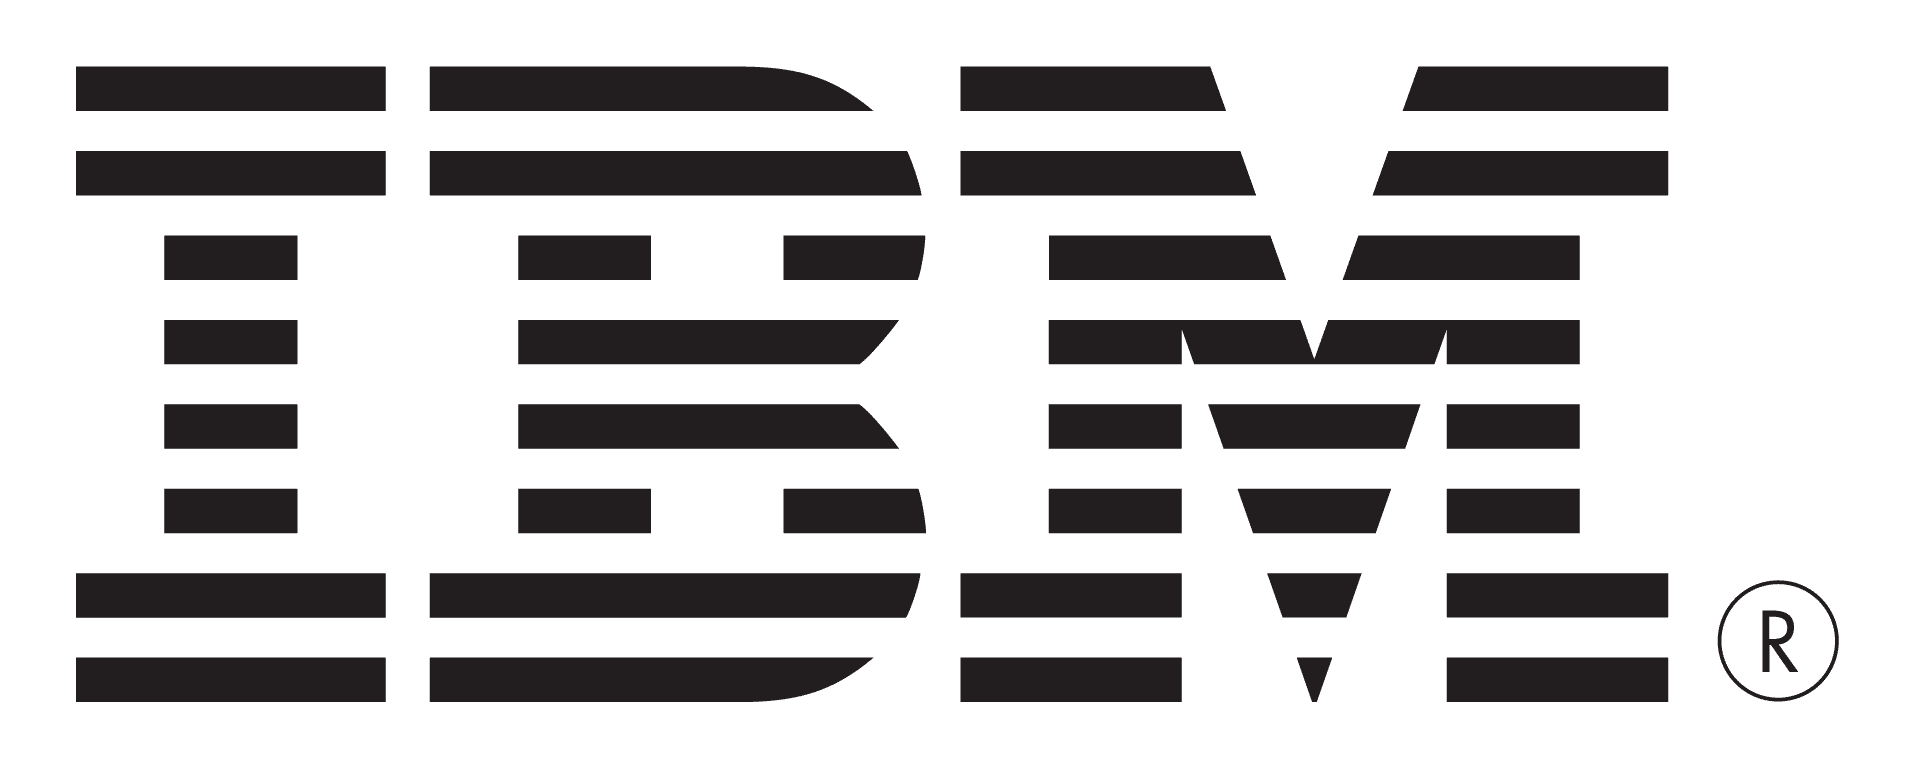 IBM SPSS Modeler - Predictive Analytics Software